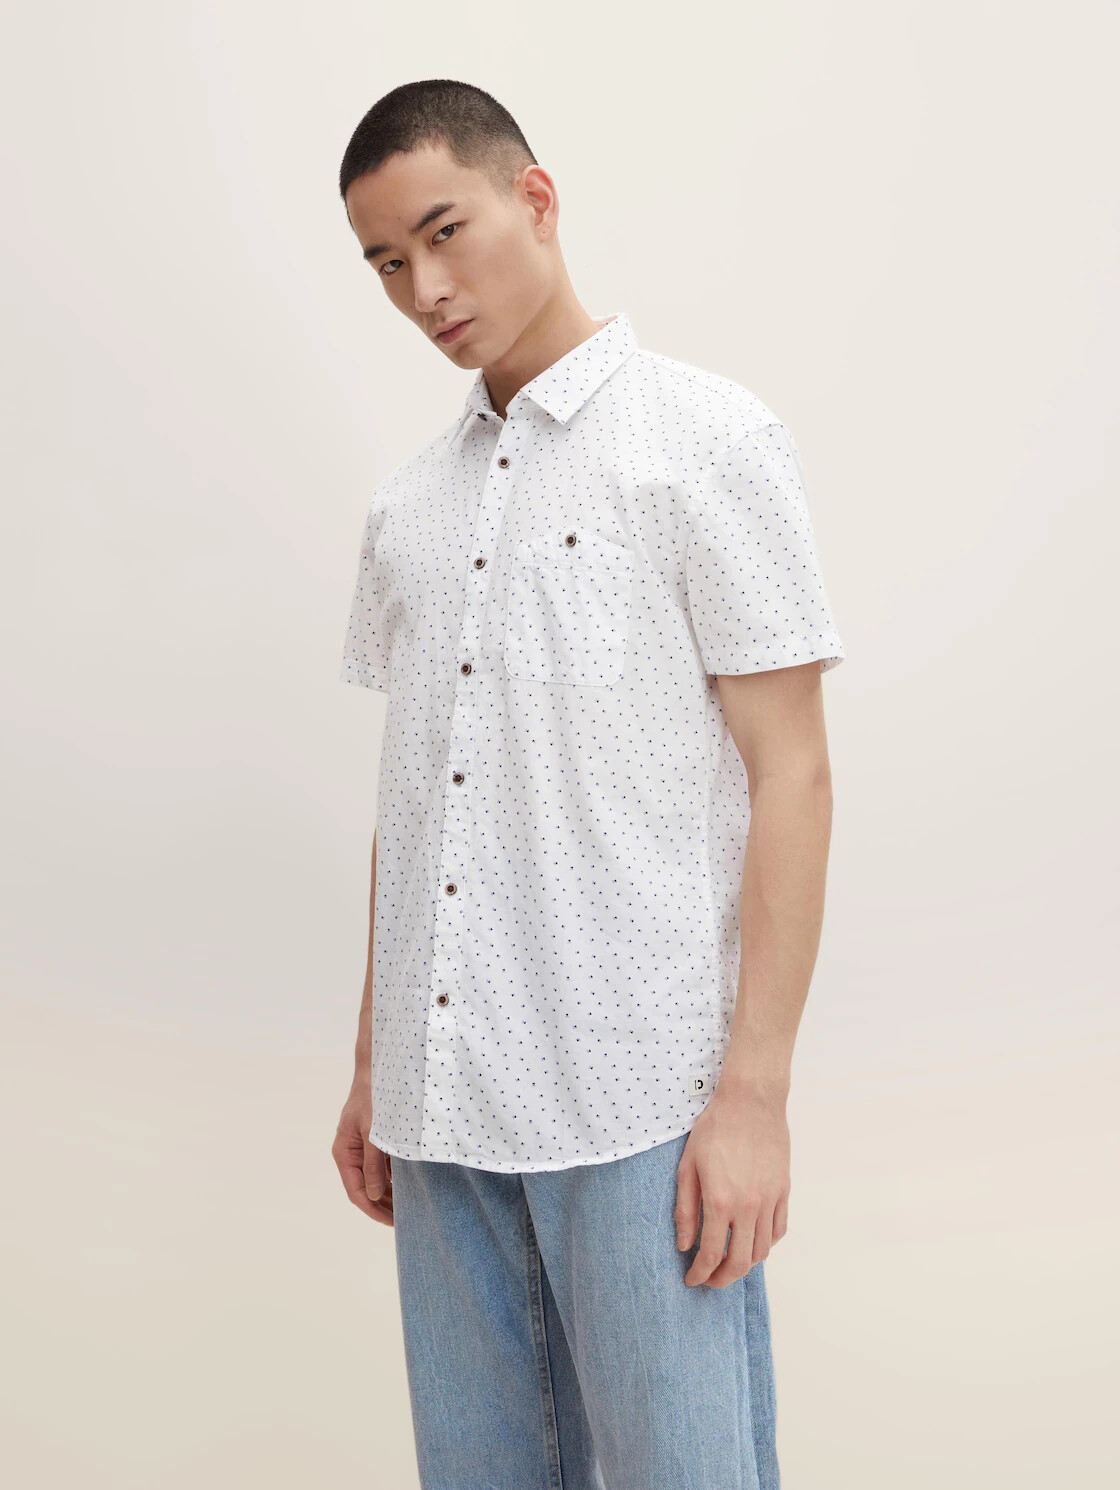 Tom Tailor Denim Slim Fit Shirt (1029840) white blue triangle print ab 9,34  € | Preisvergleich bei